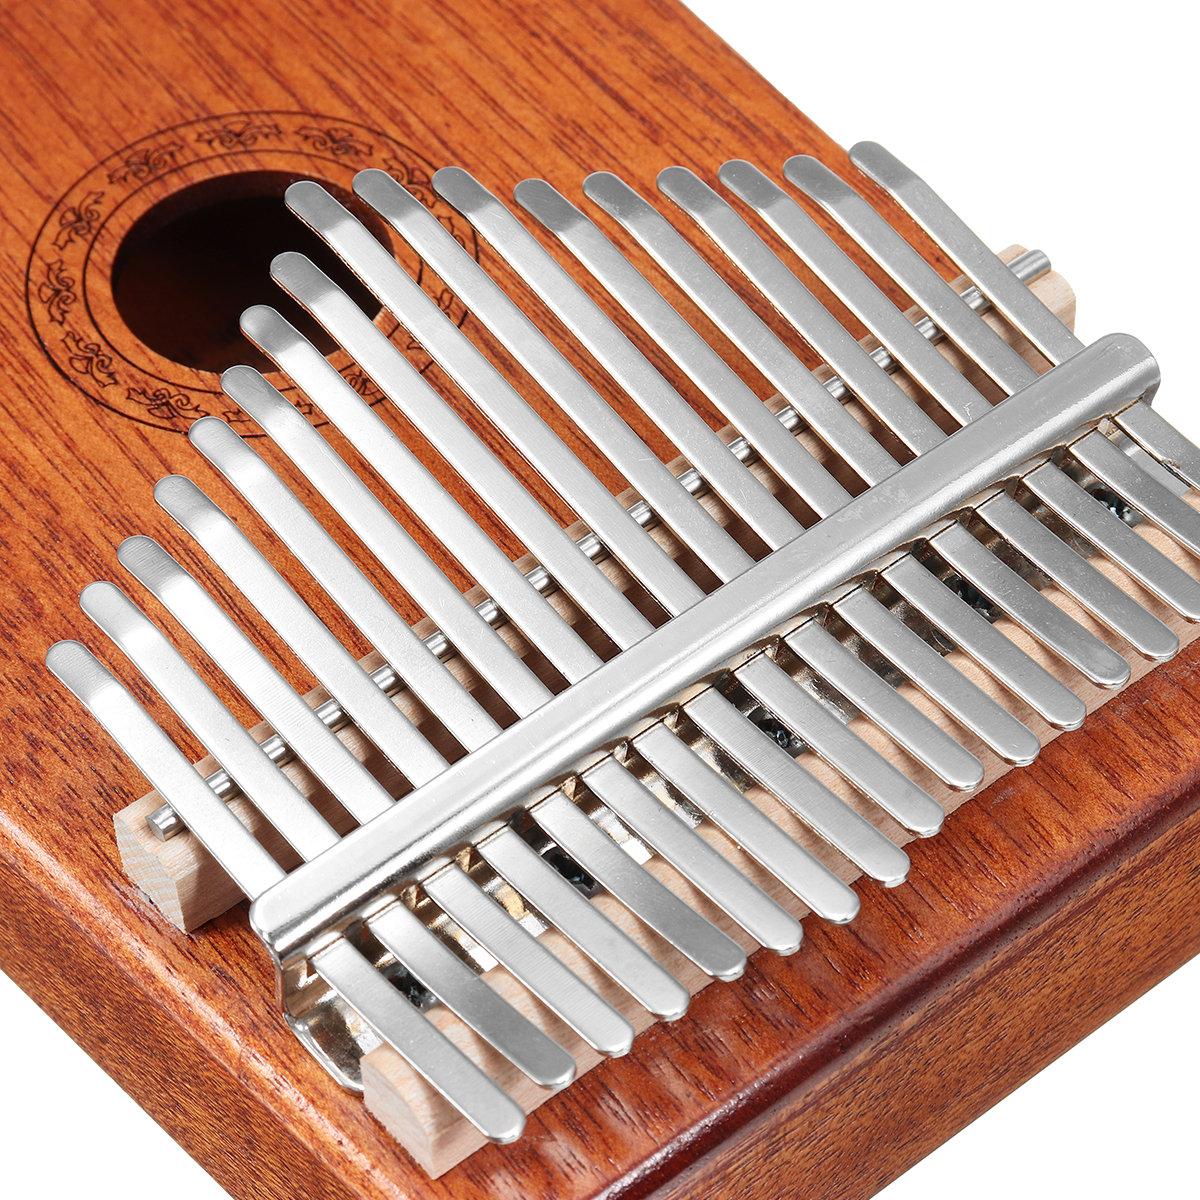 17-Keys-Wood-Kalimba-Mahogany-Thumb-Piano-Finger-Percussion-With-Tuning-Hammer-1325982